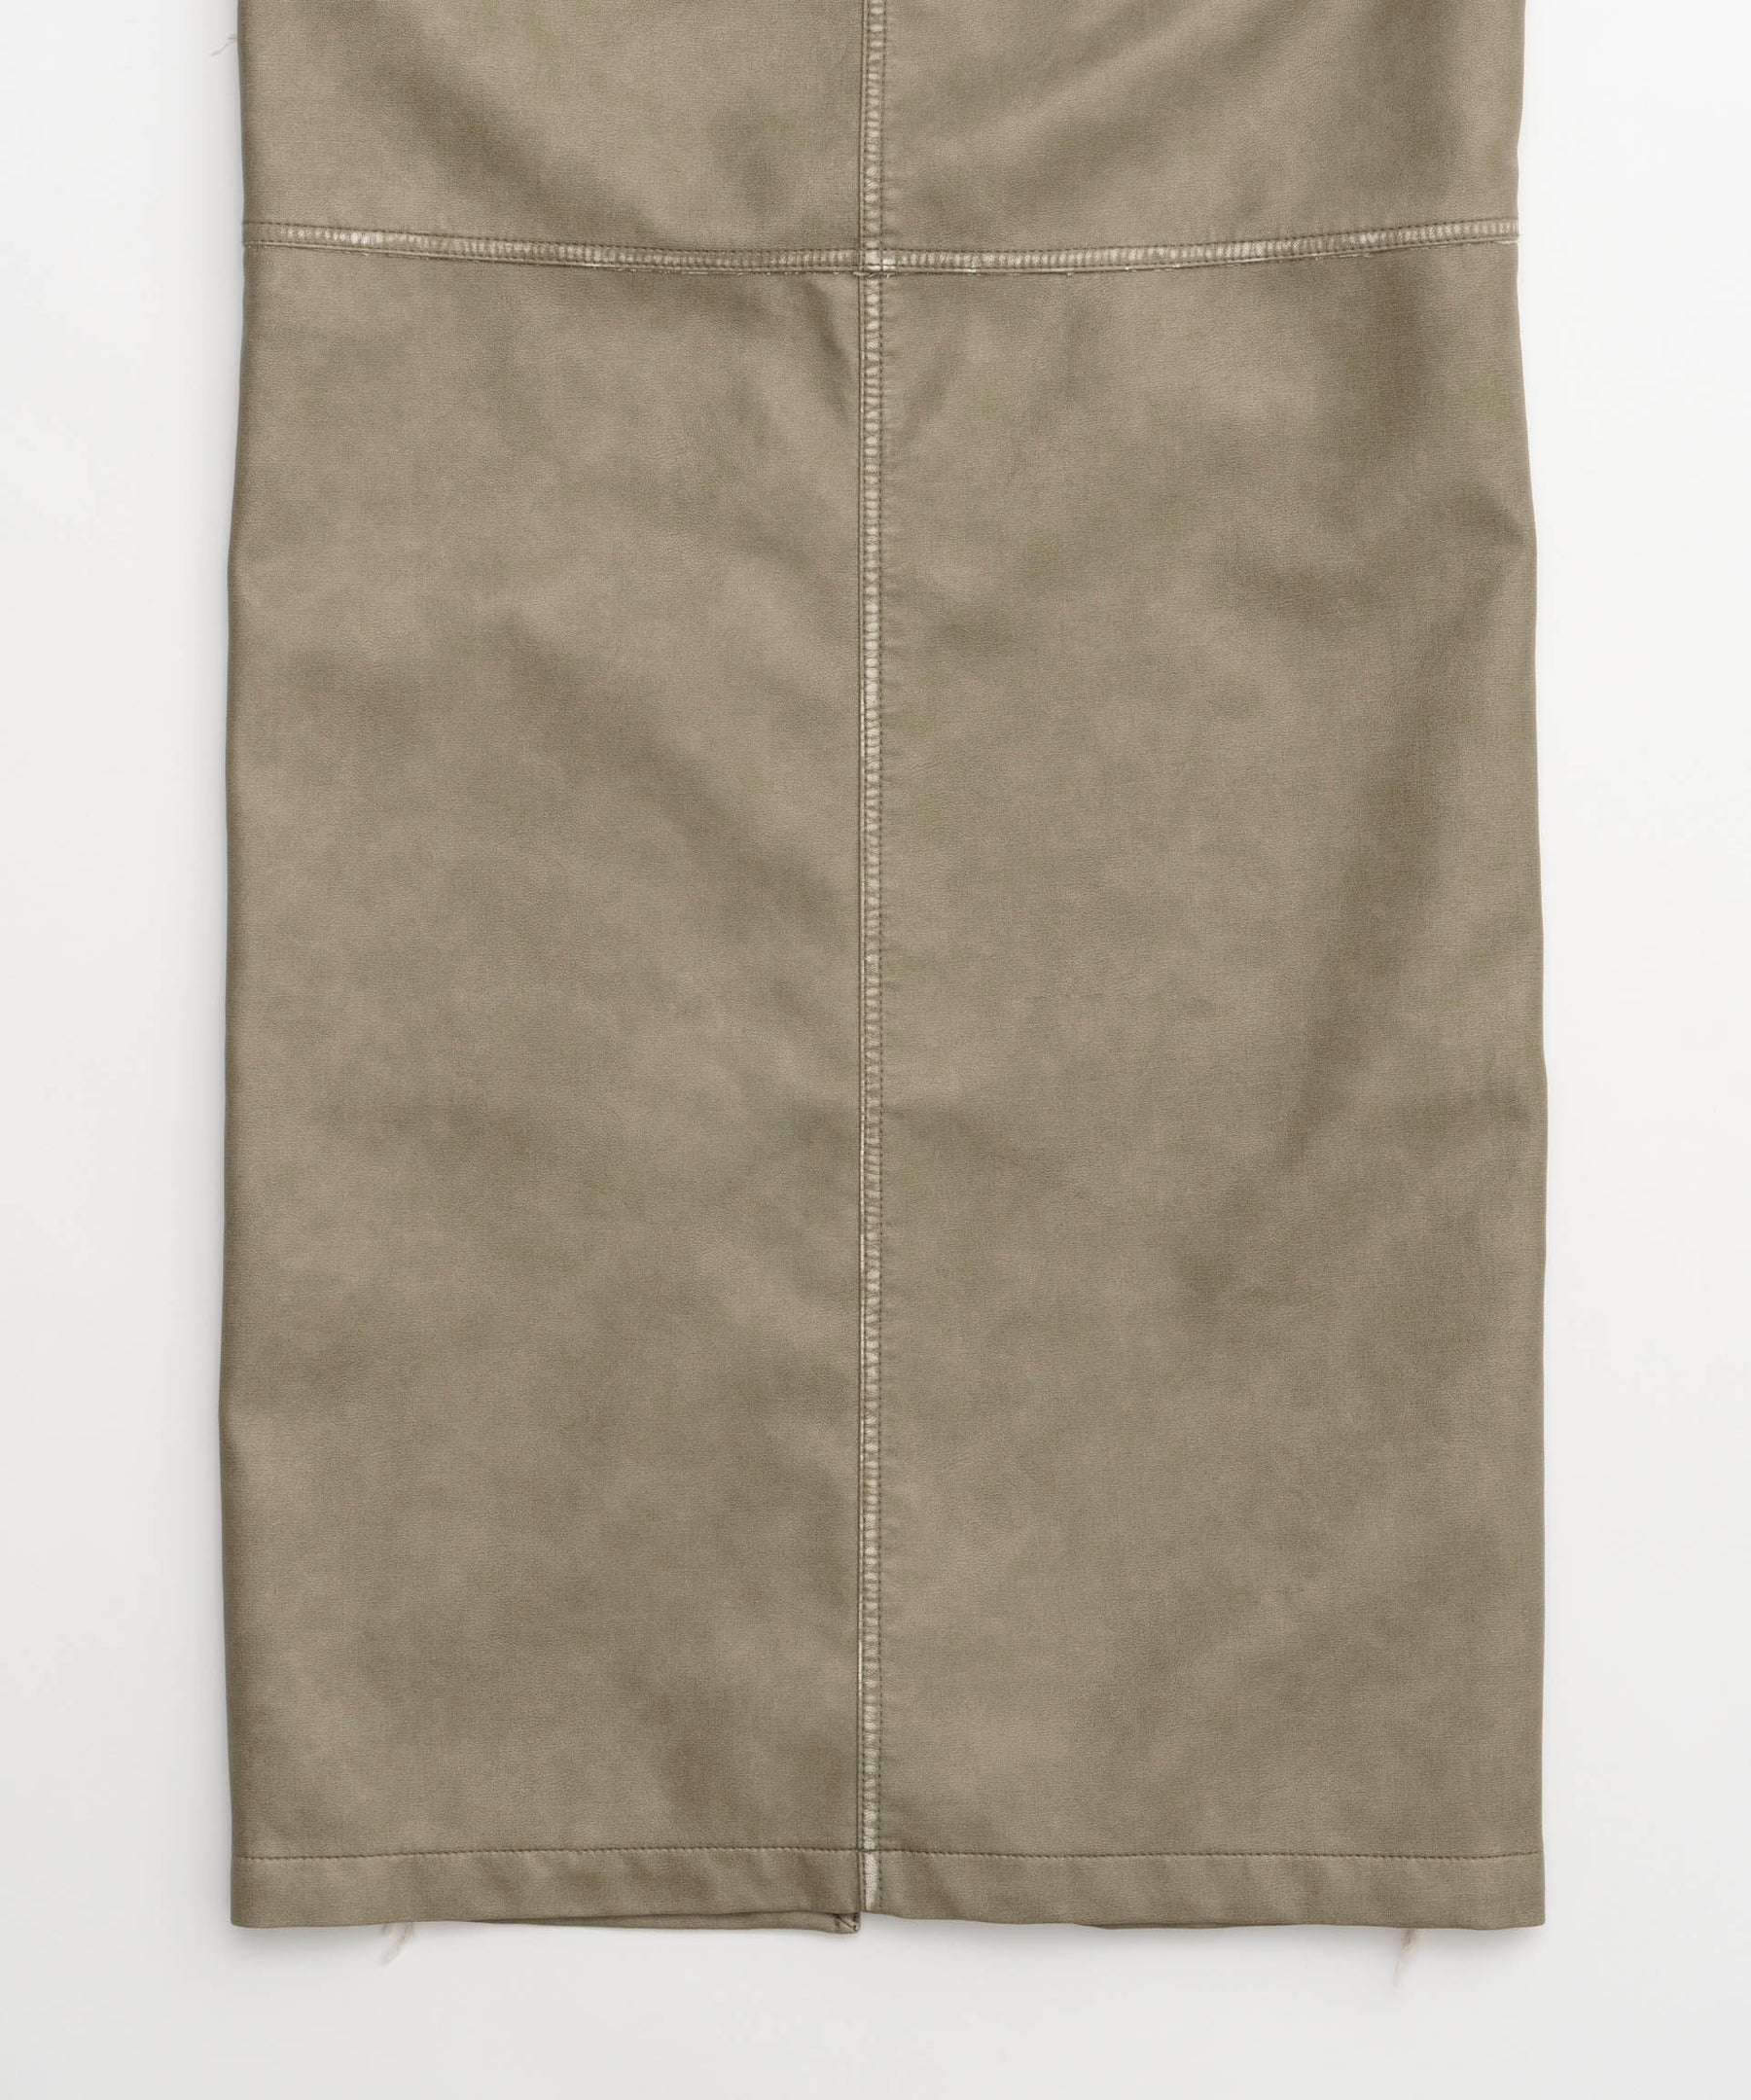 【24AUTUMN PRE-ORDER】Vegan Leather Tight Skirt